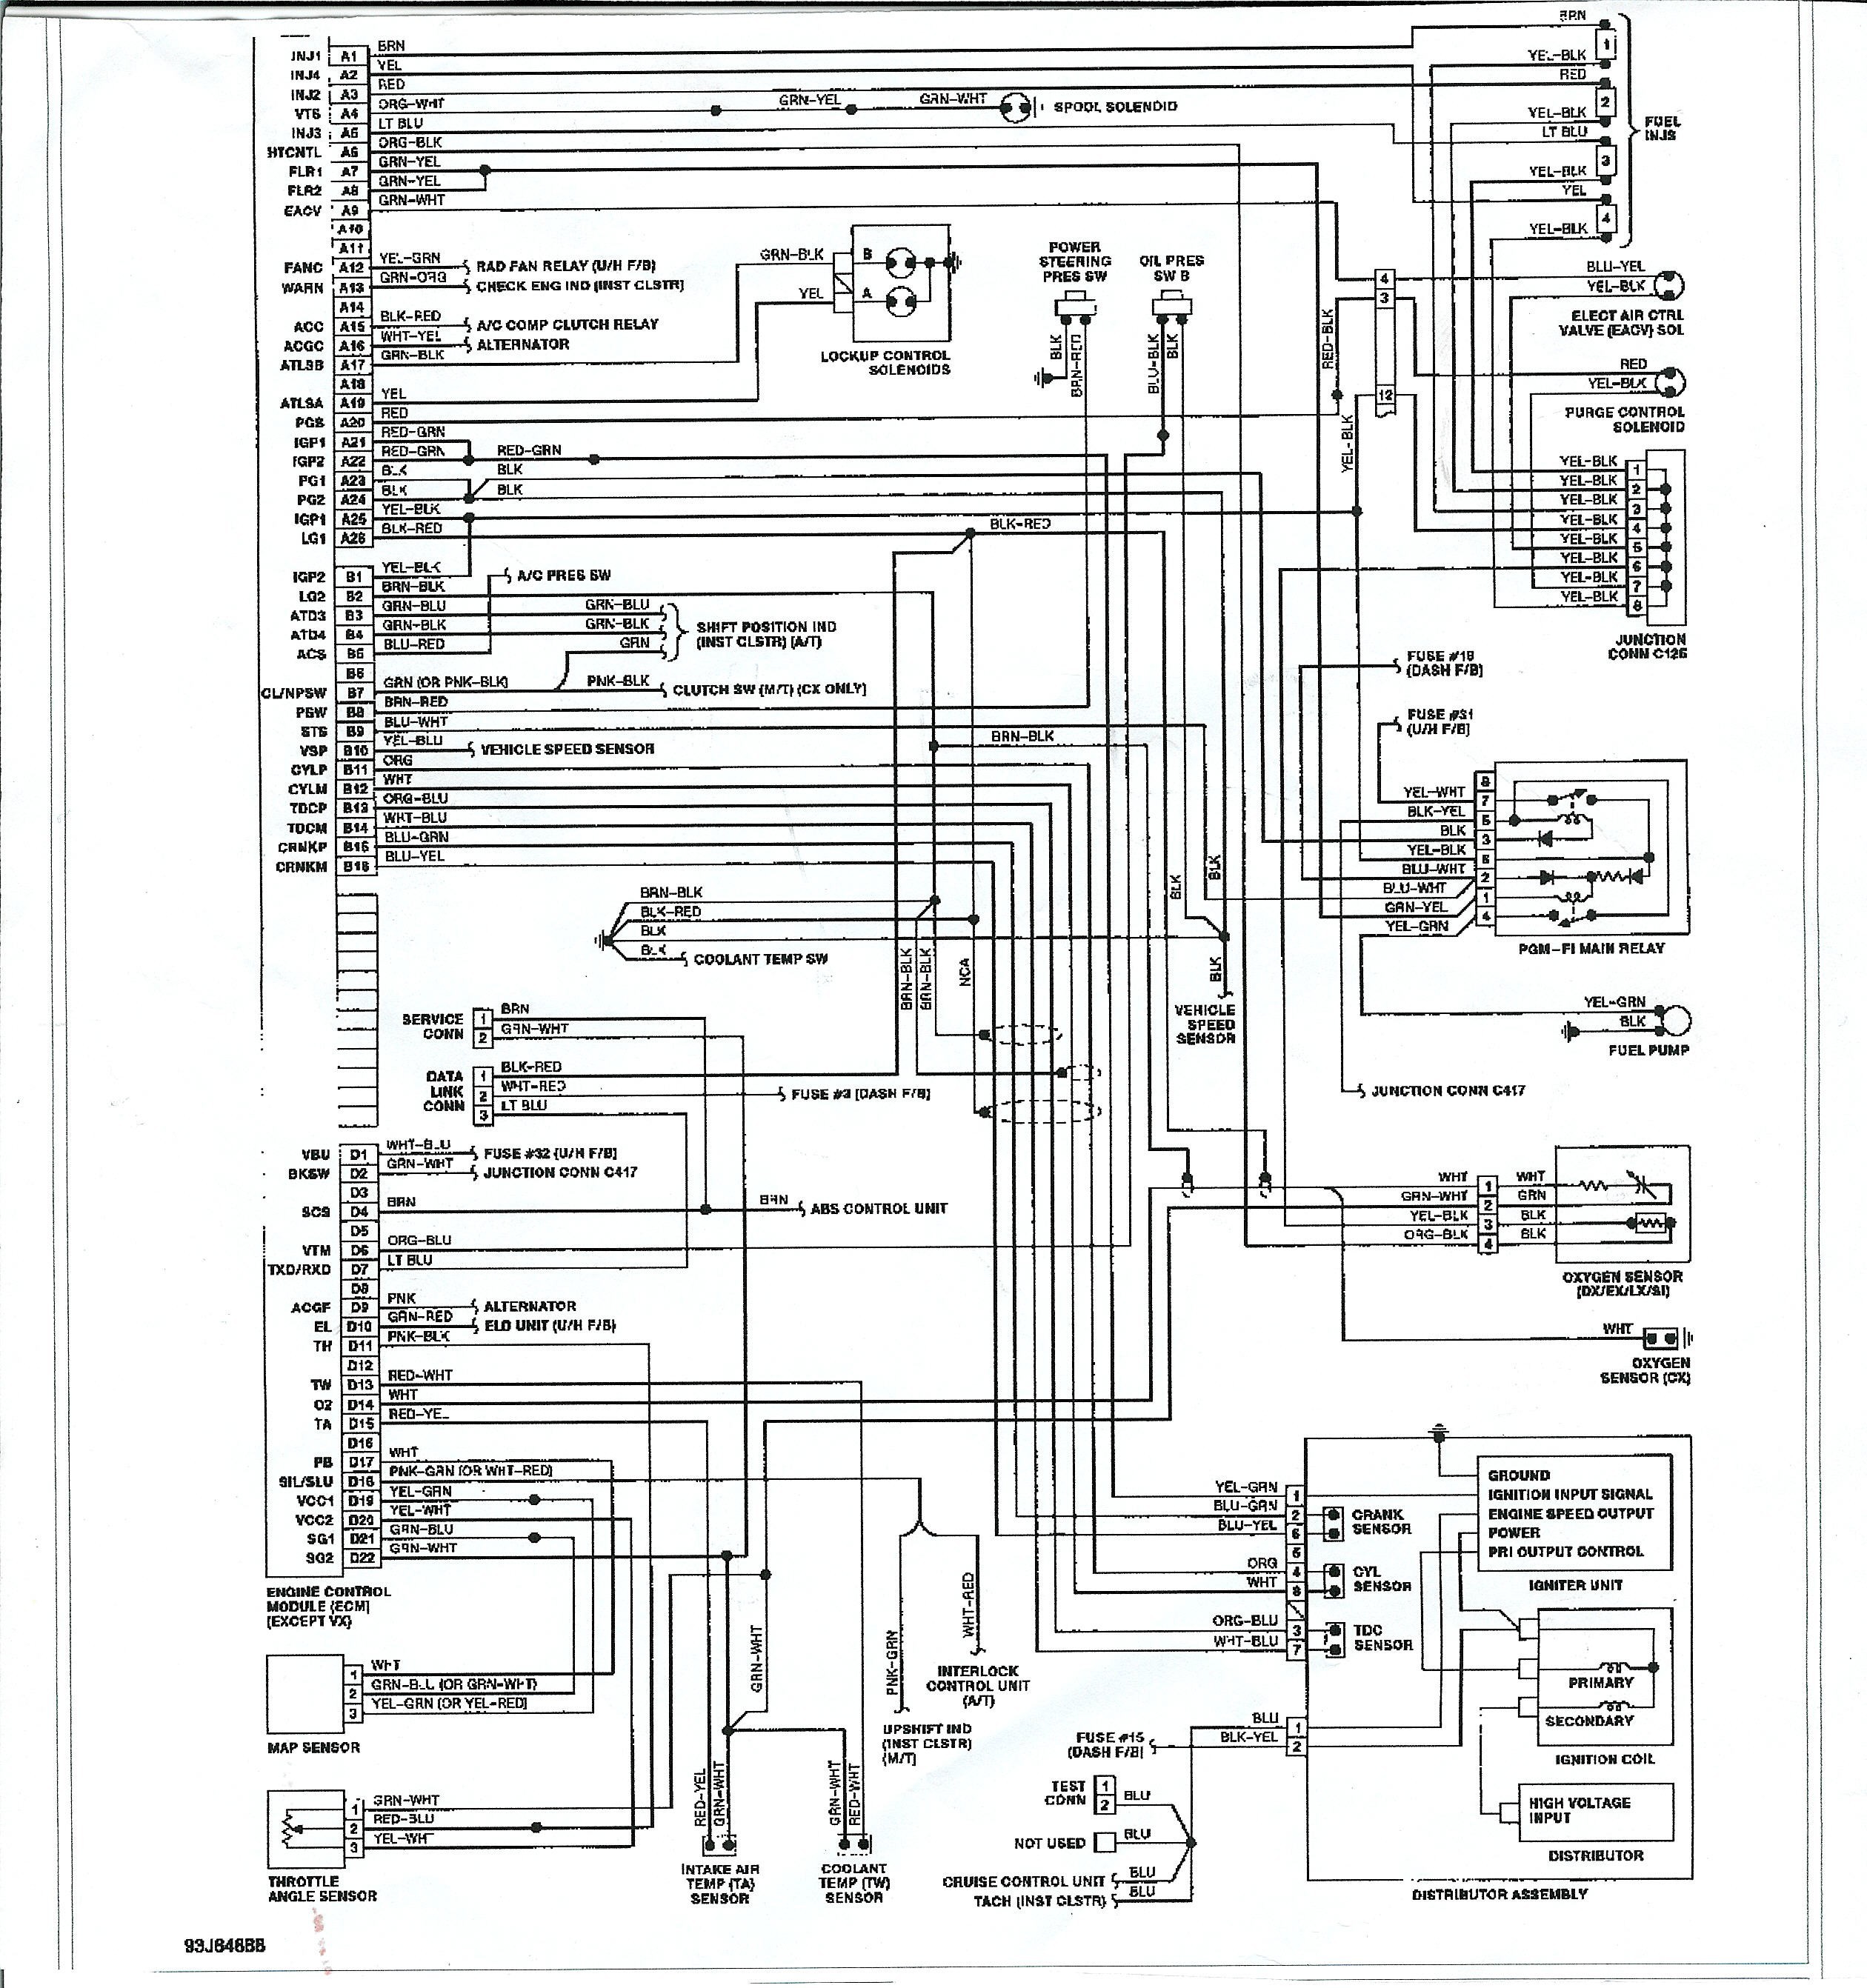 1995mitsubishi Eclipse Tranny Wiring Diagram 94 Accord Transmission Wiring Diagrams Lincoln Continental Of 1995mitsubishi Eclipse Tranny Wiring Diagram